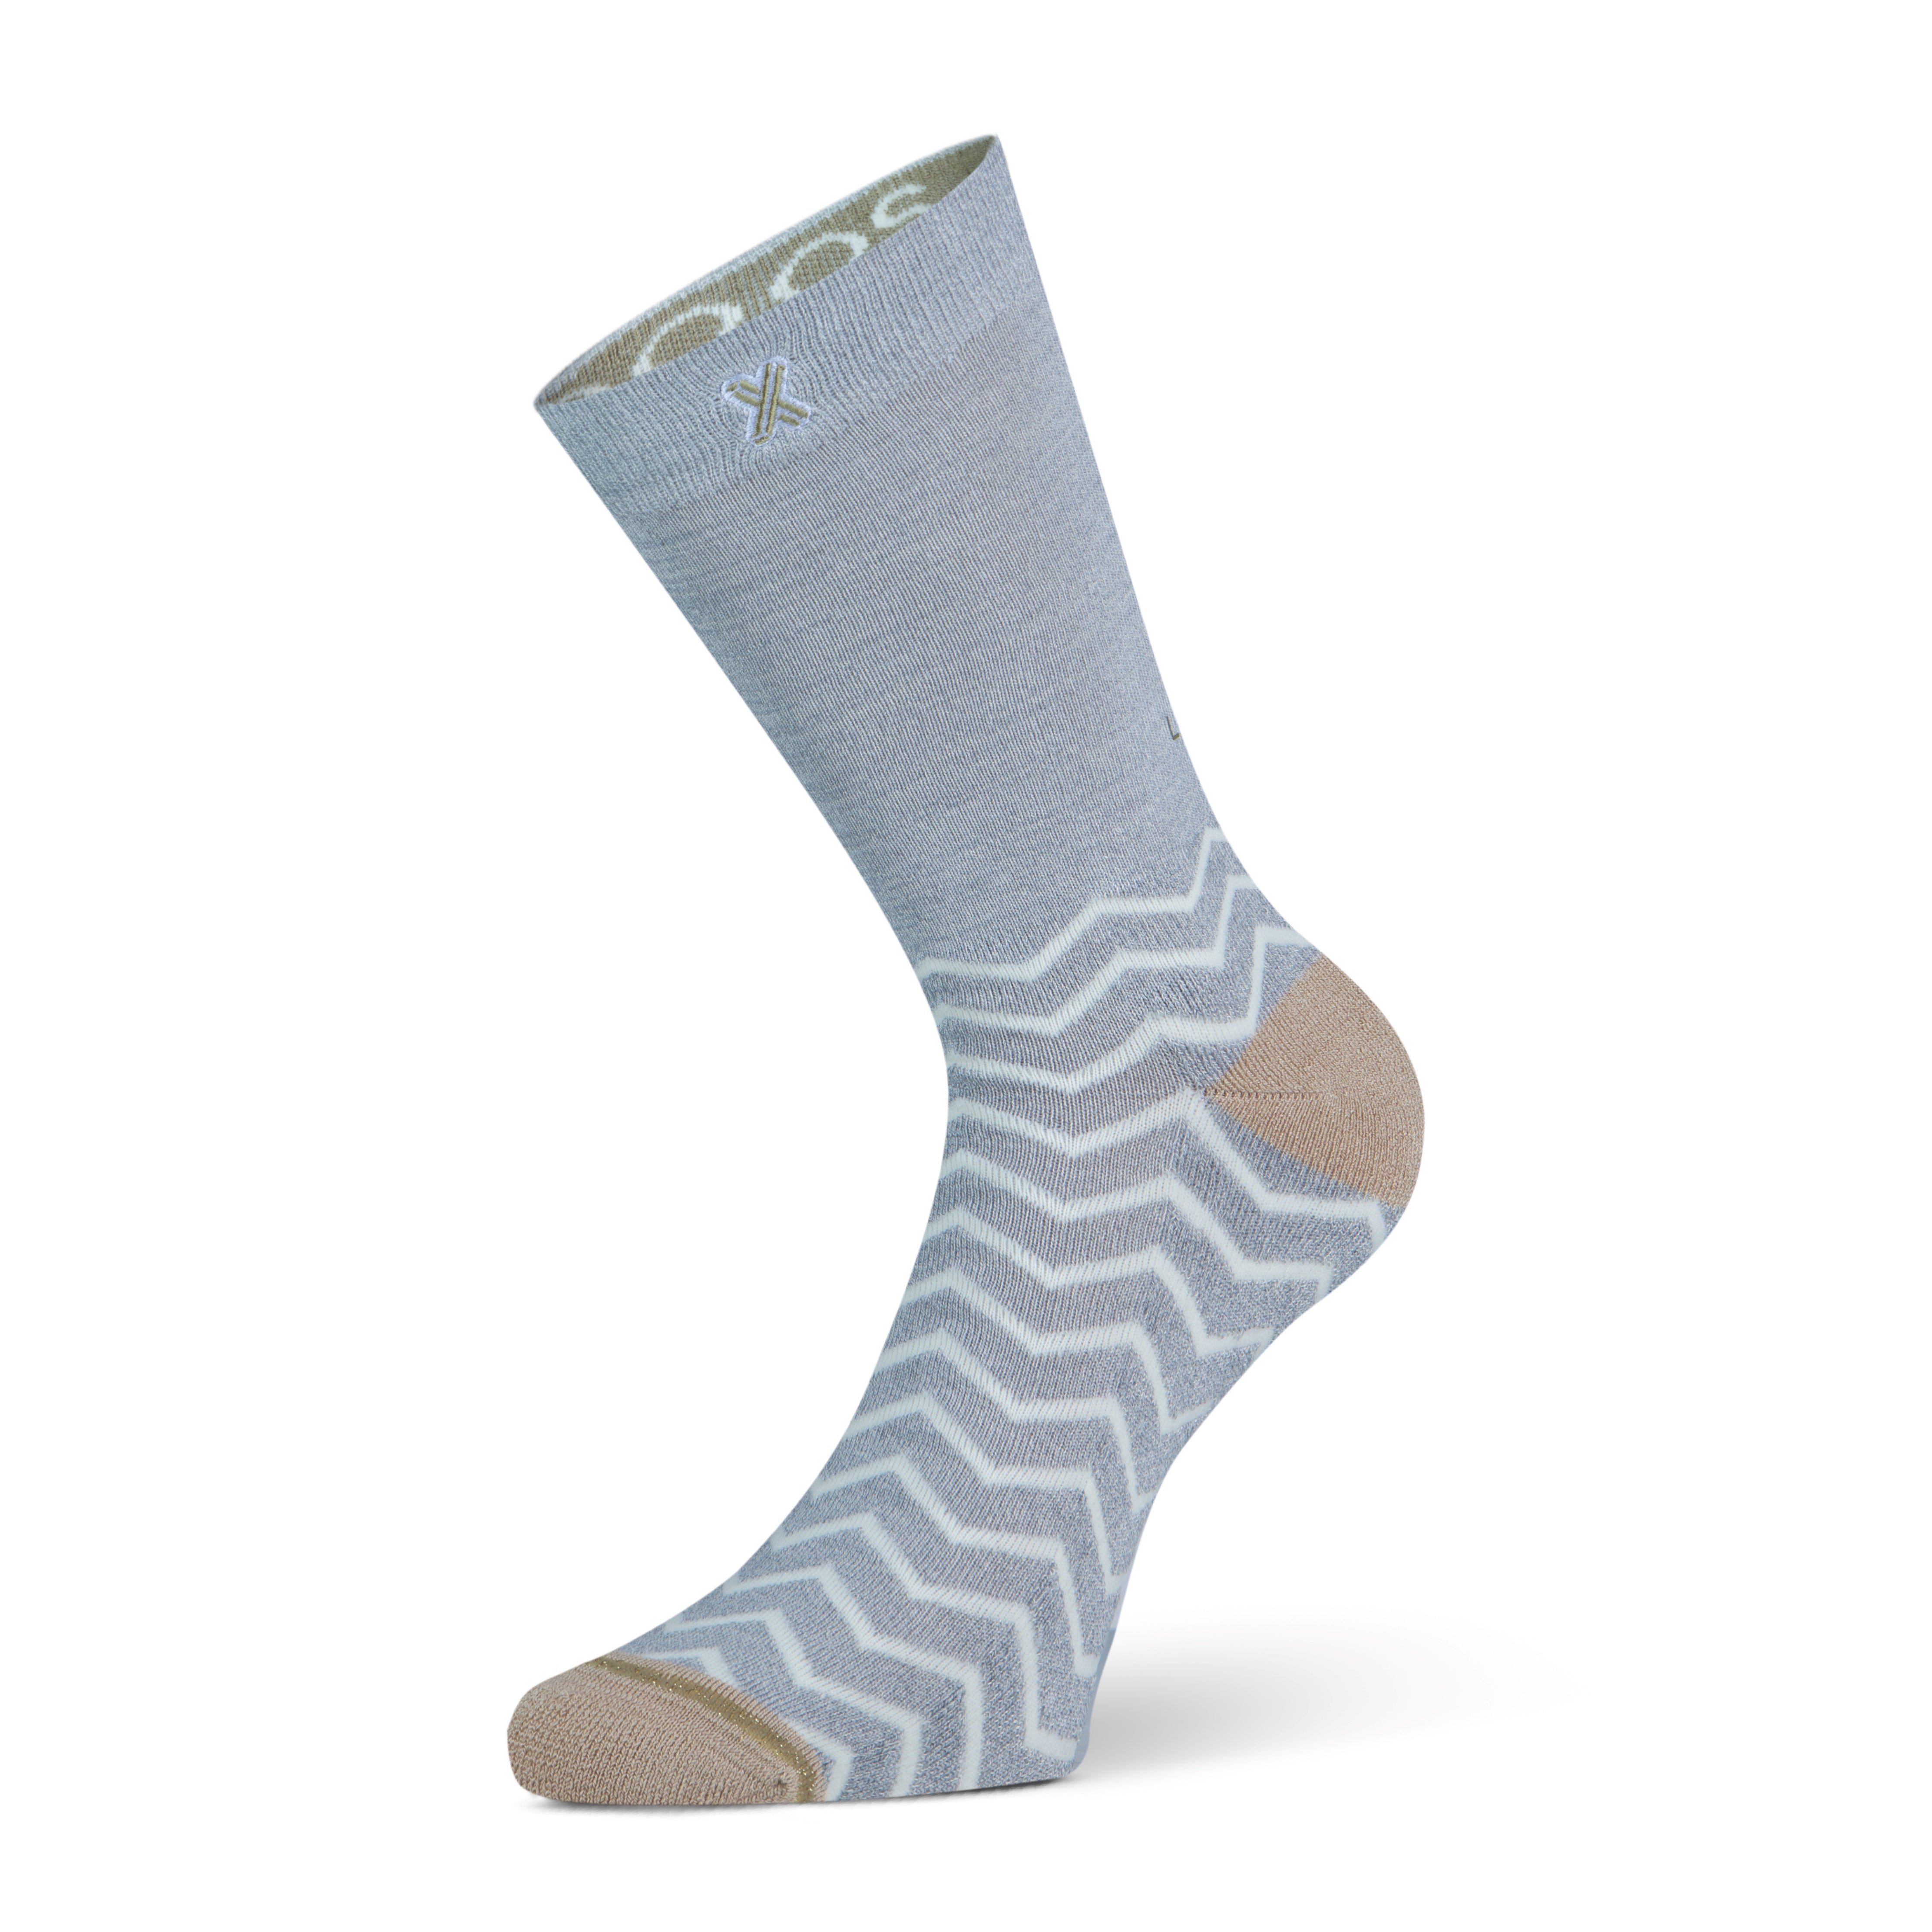 Dubai women's socks Light Grey